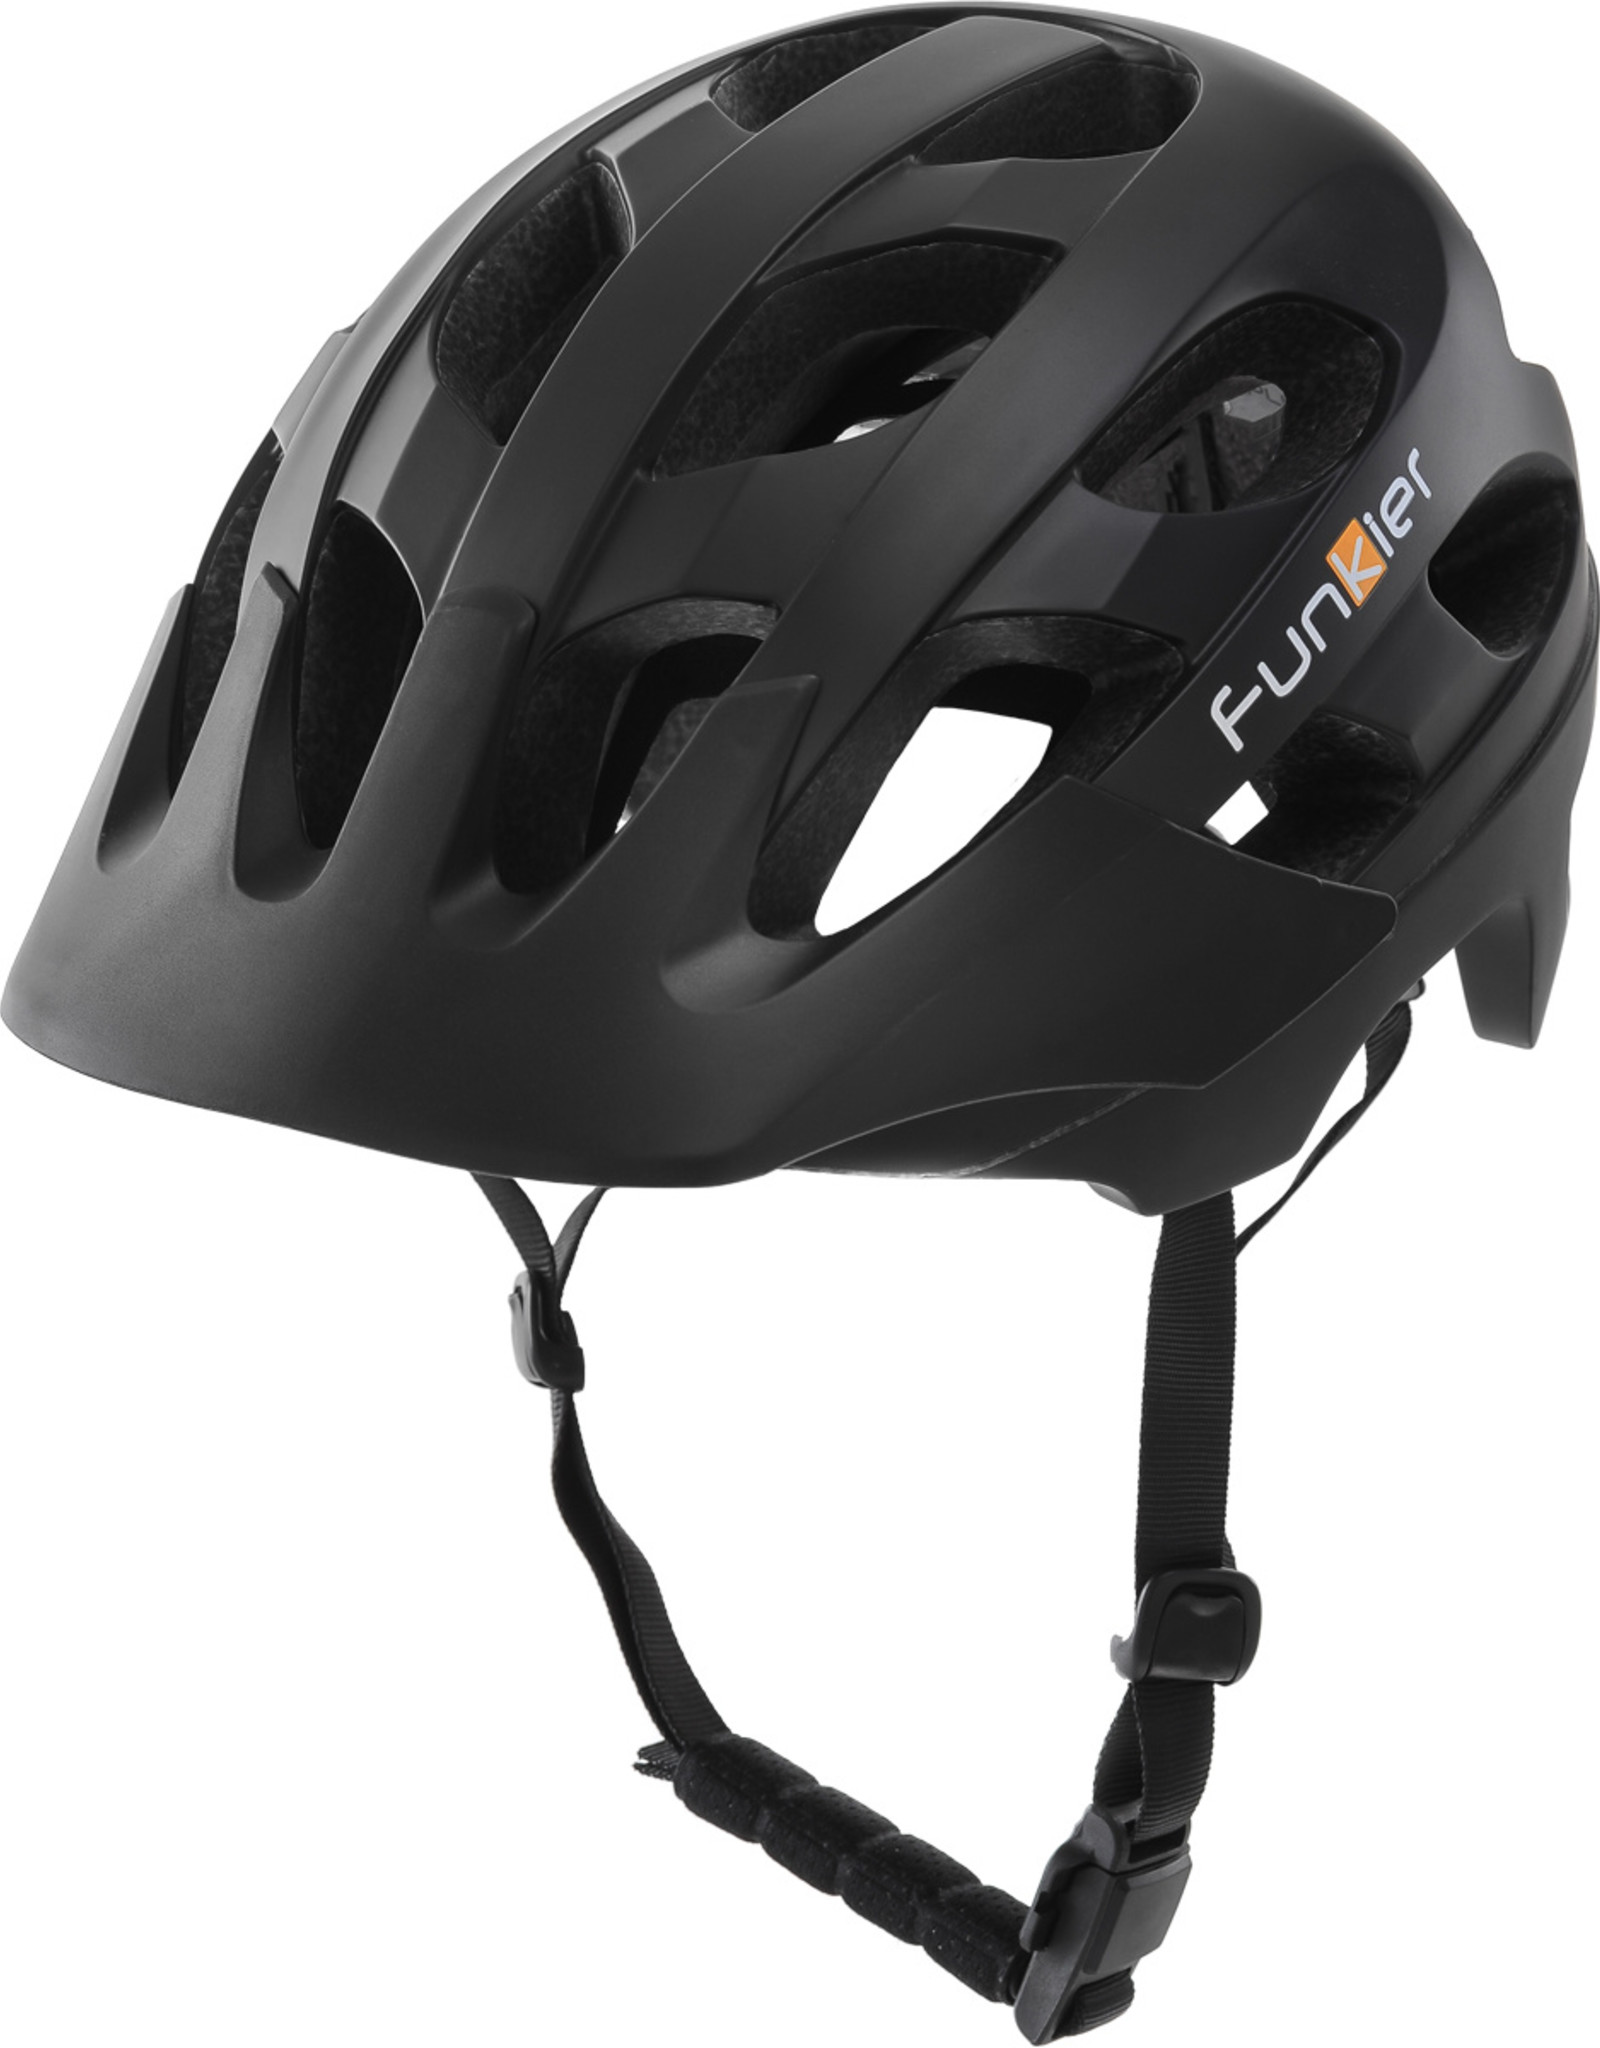 Funkier Camba MTB All Mountain Helmet in Black/Black